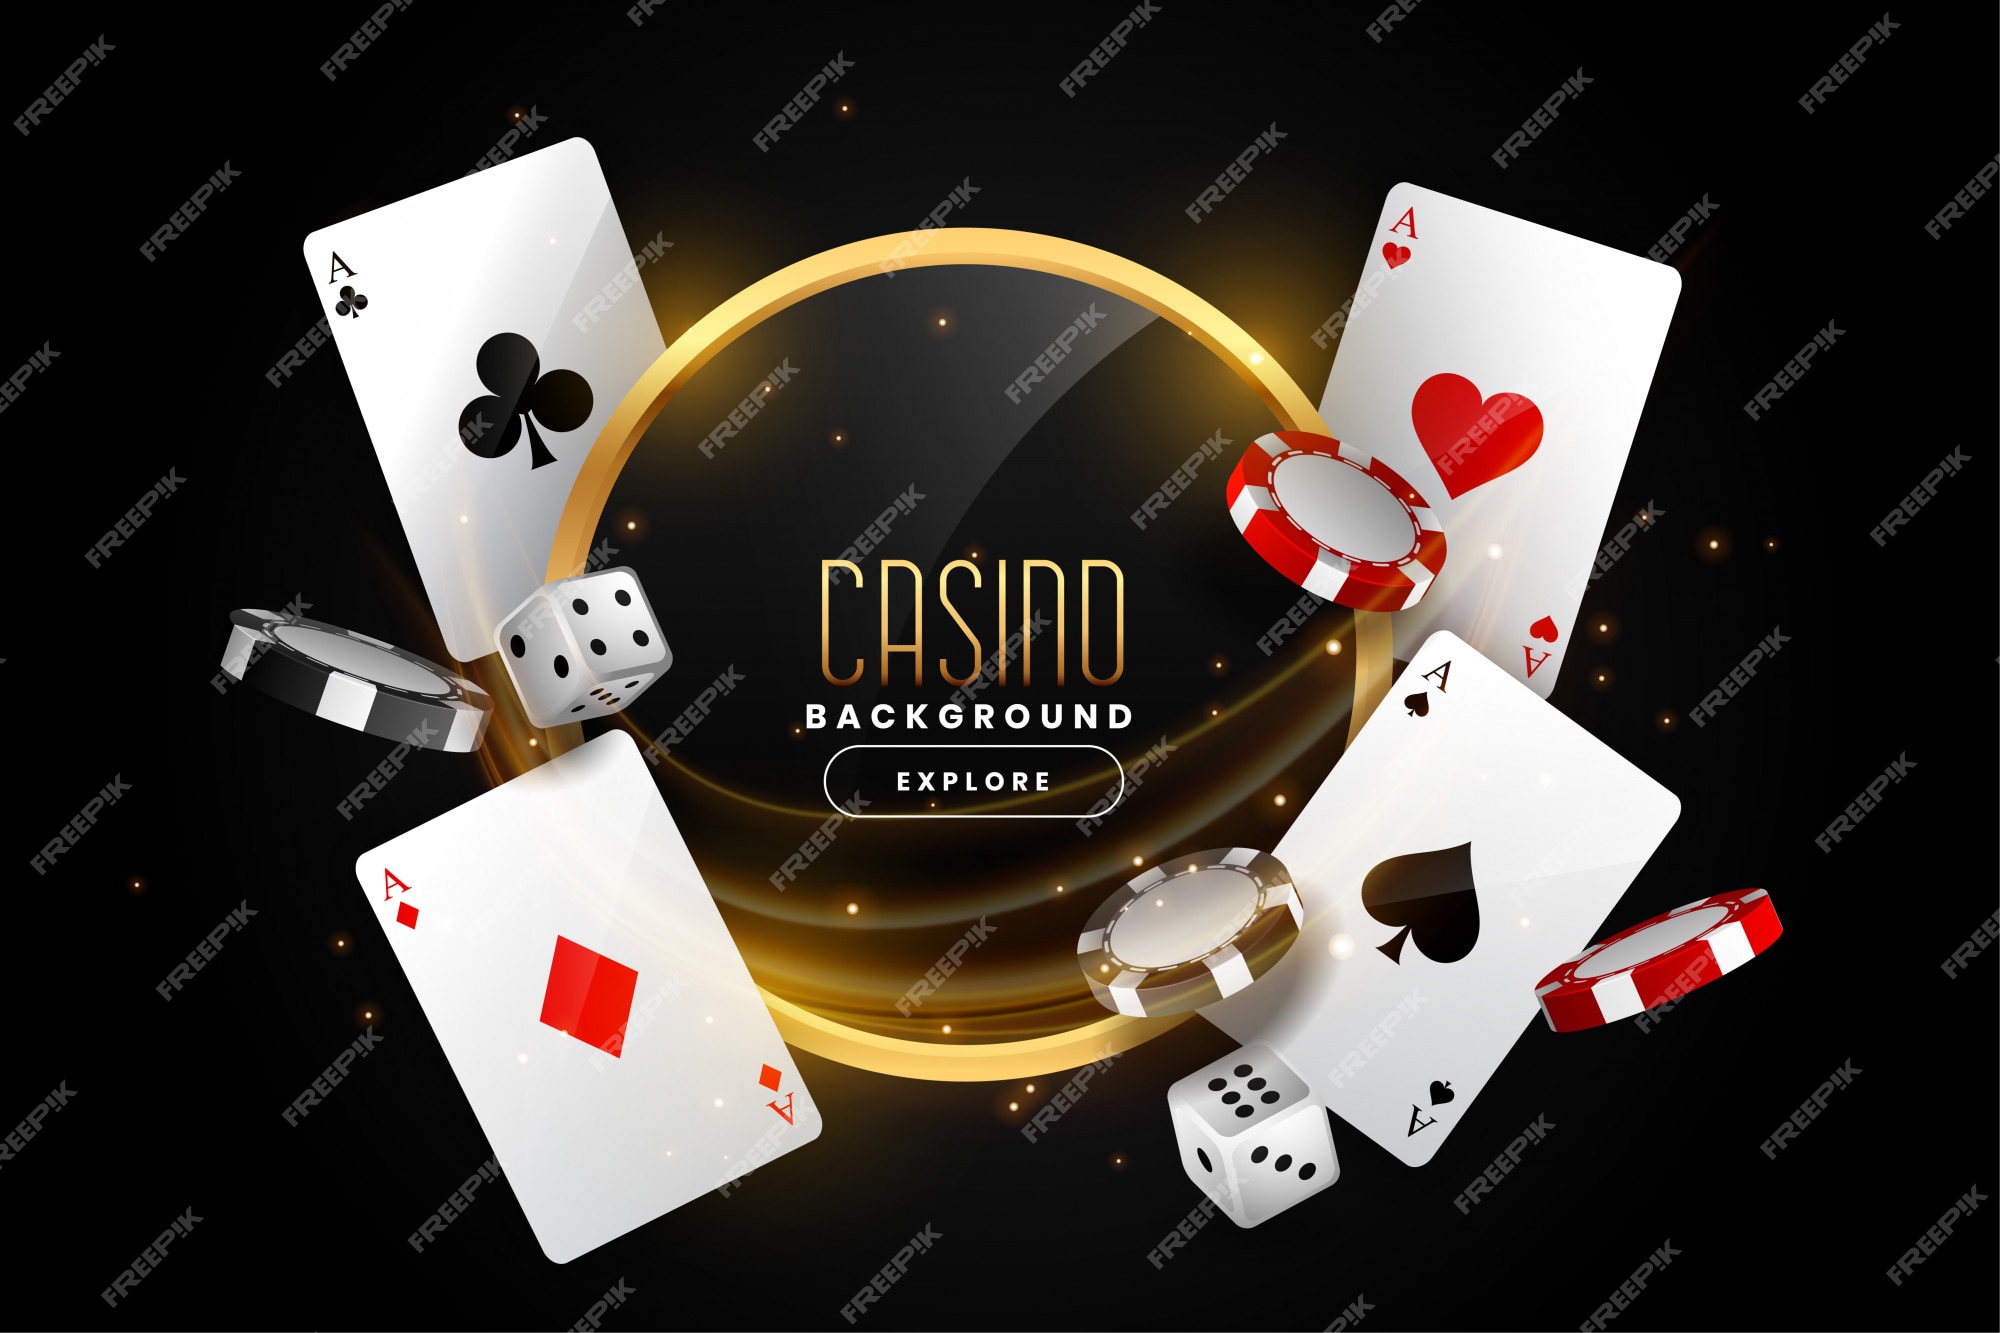 Casino gold Images | Free Vectors, Stock Photos & PSD